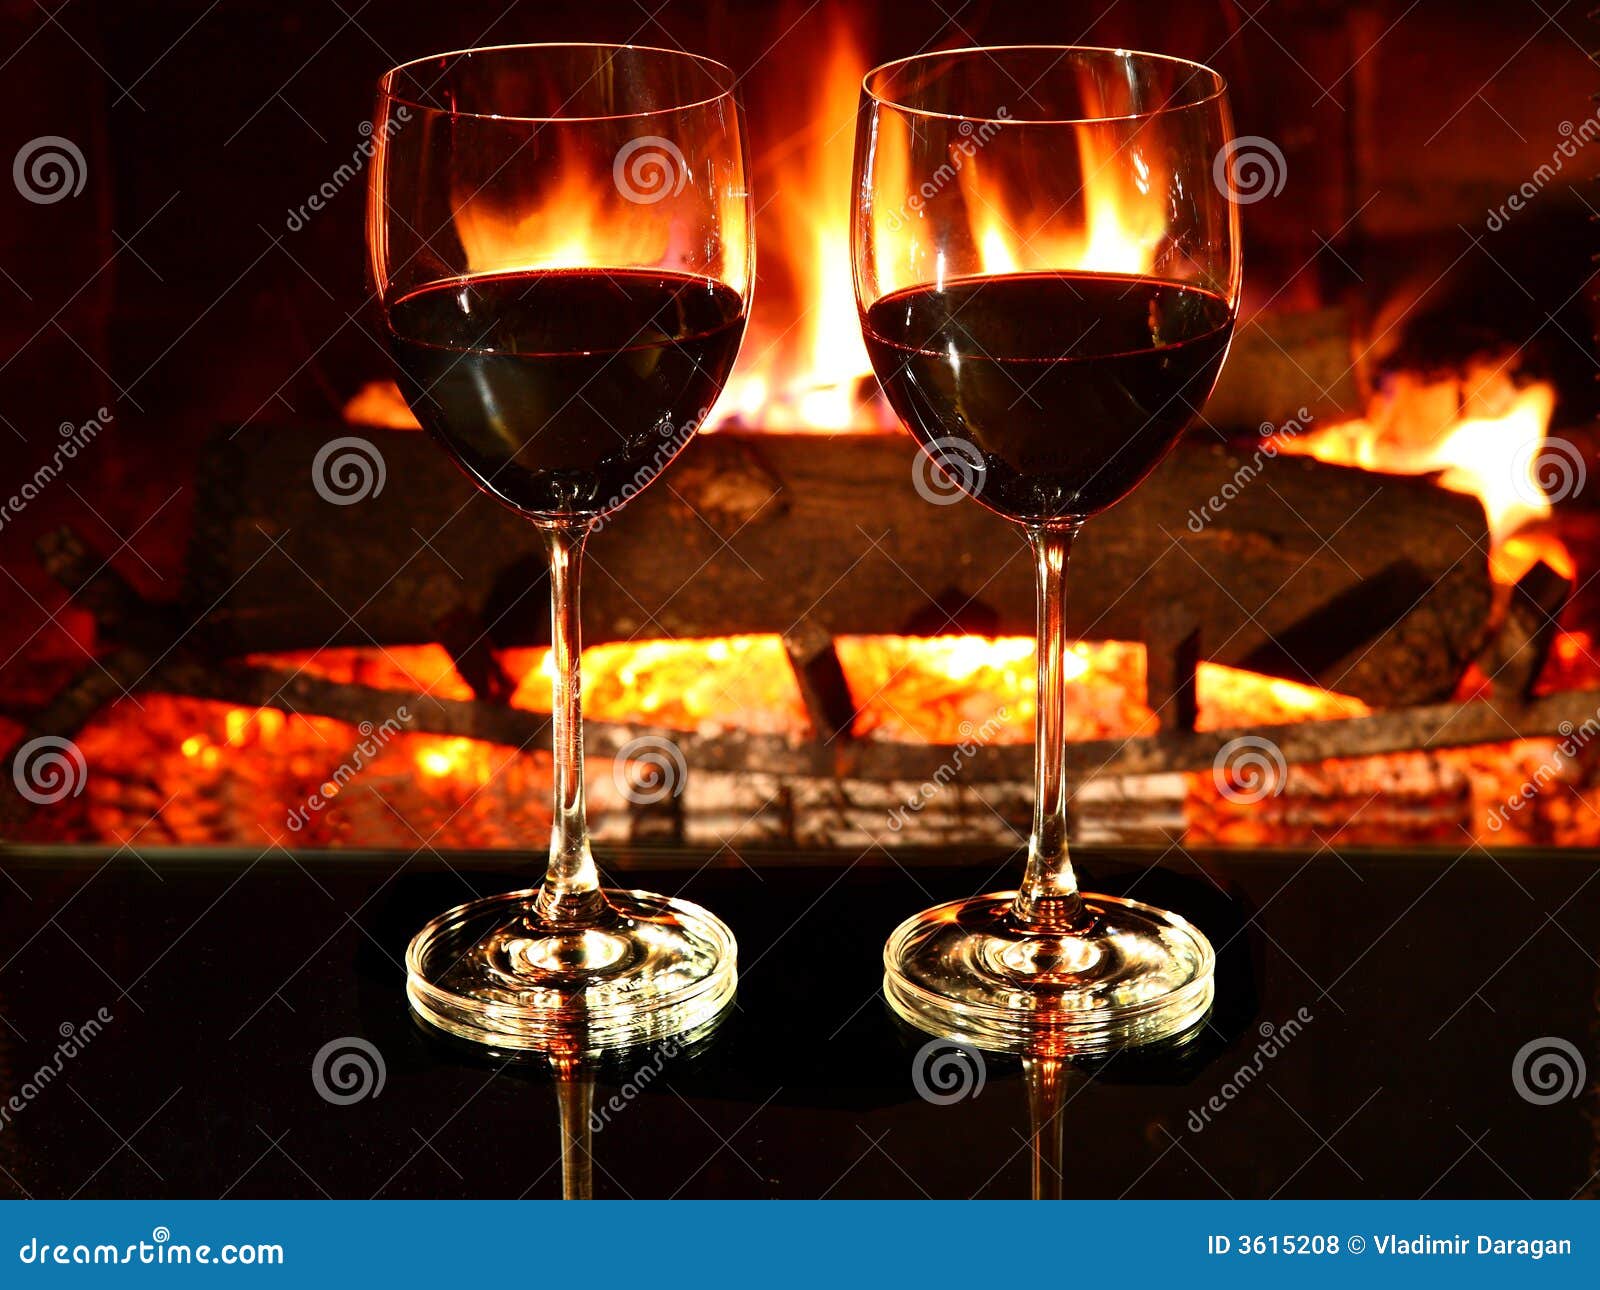 Romantic Dinner, Wine, Fireplace Royalty Free Stock Photos - Image: 3615208